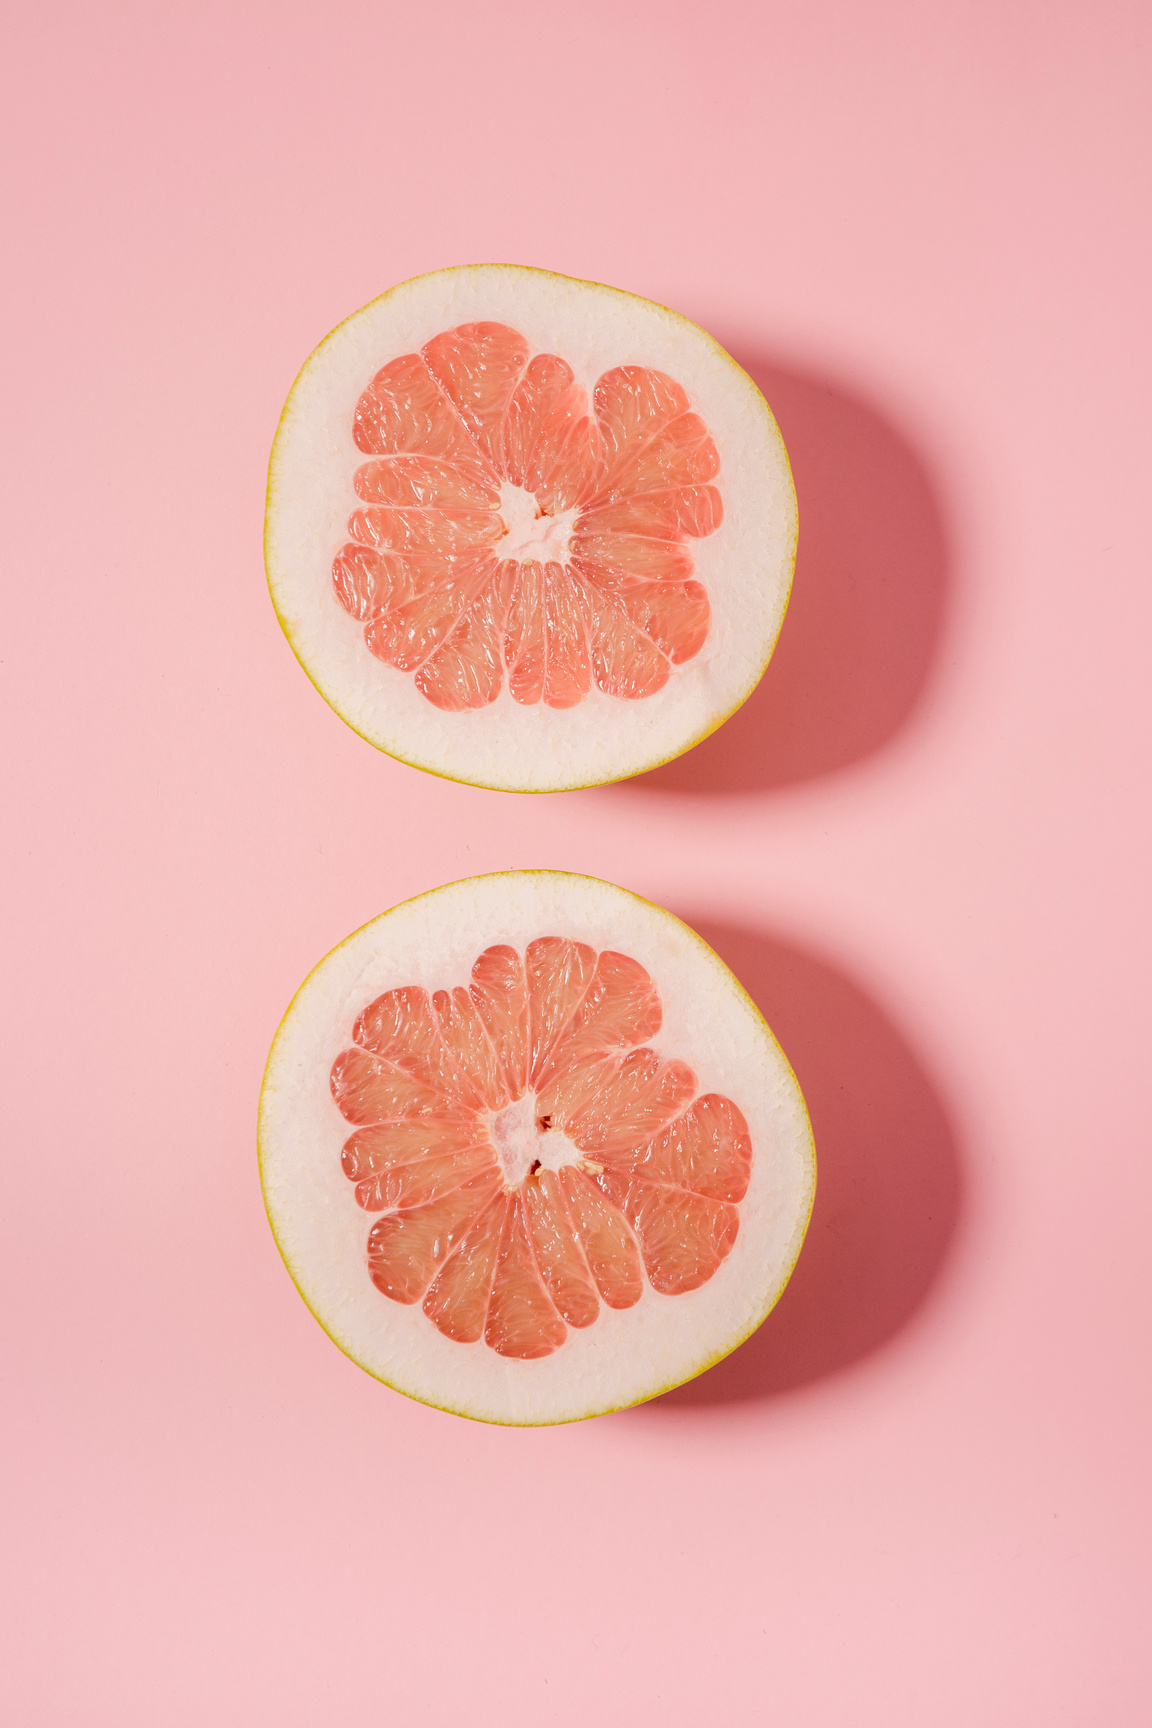 Sliced juicy grapefruit on pink surface